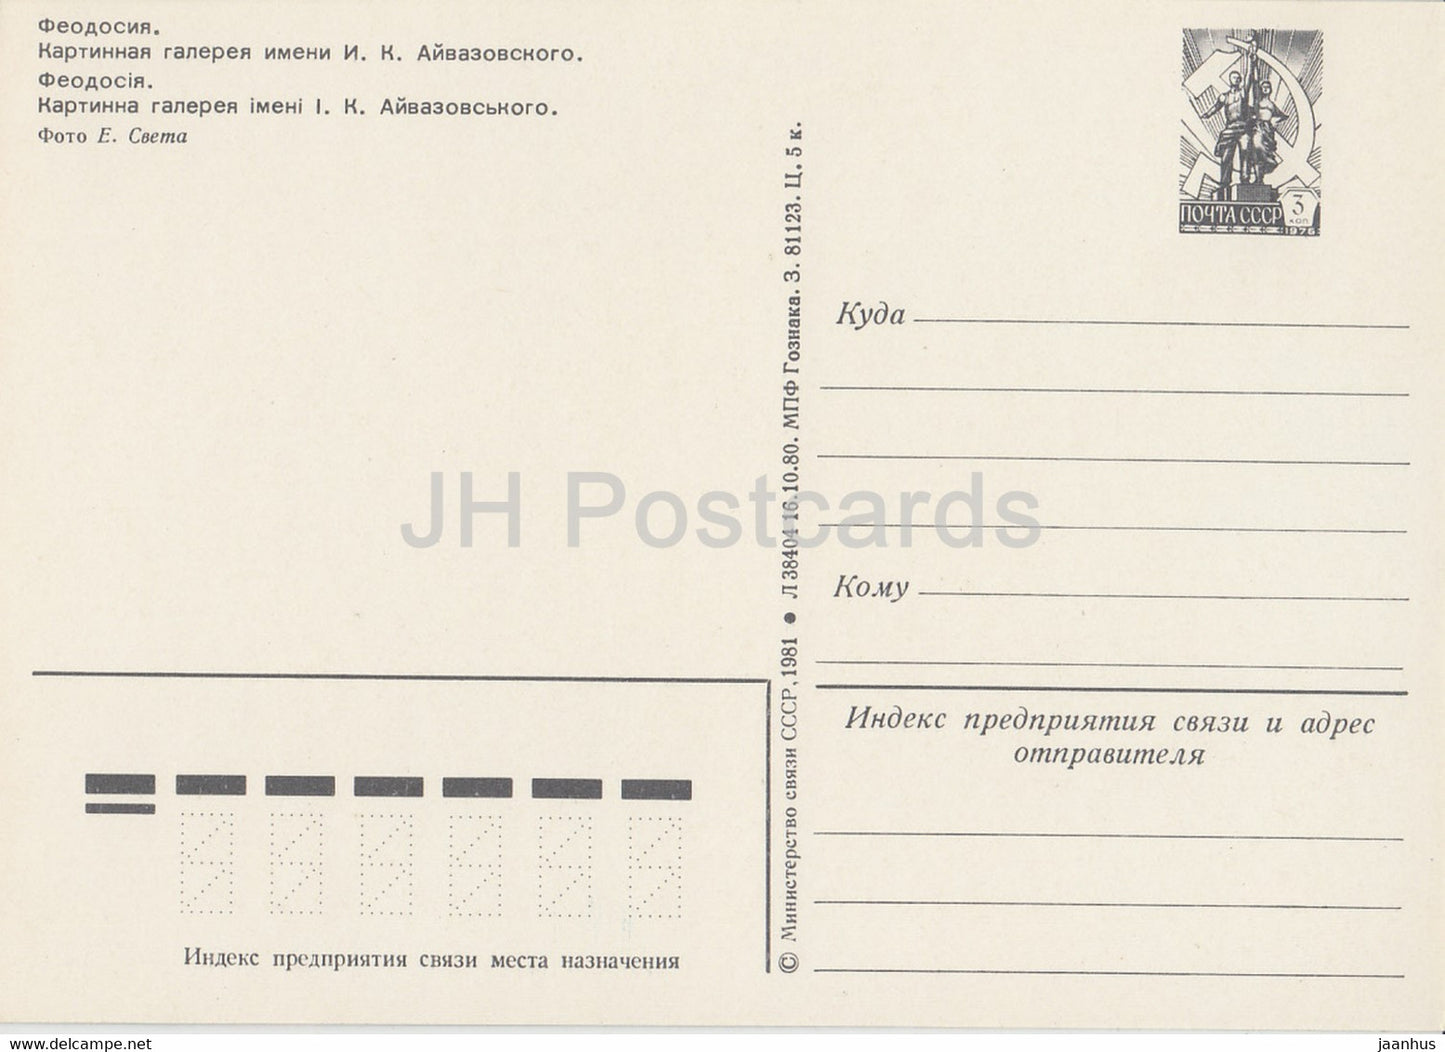 Crimée - Feodosia - Aivazovsky Picture Gallery - entier postal - 1981 - Ukraine URSS - inutilisé